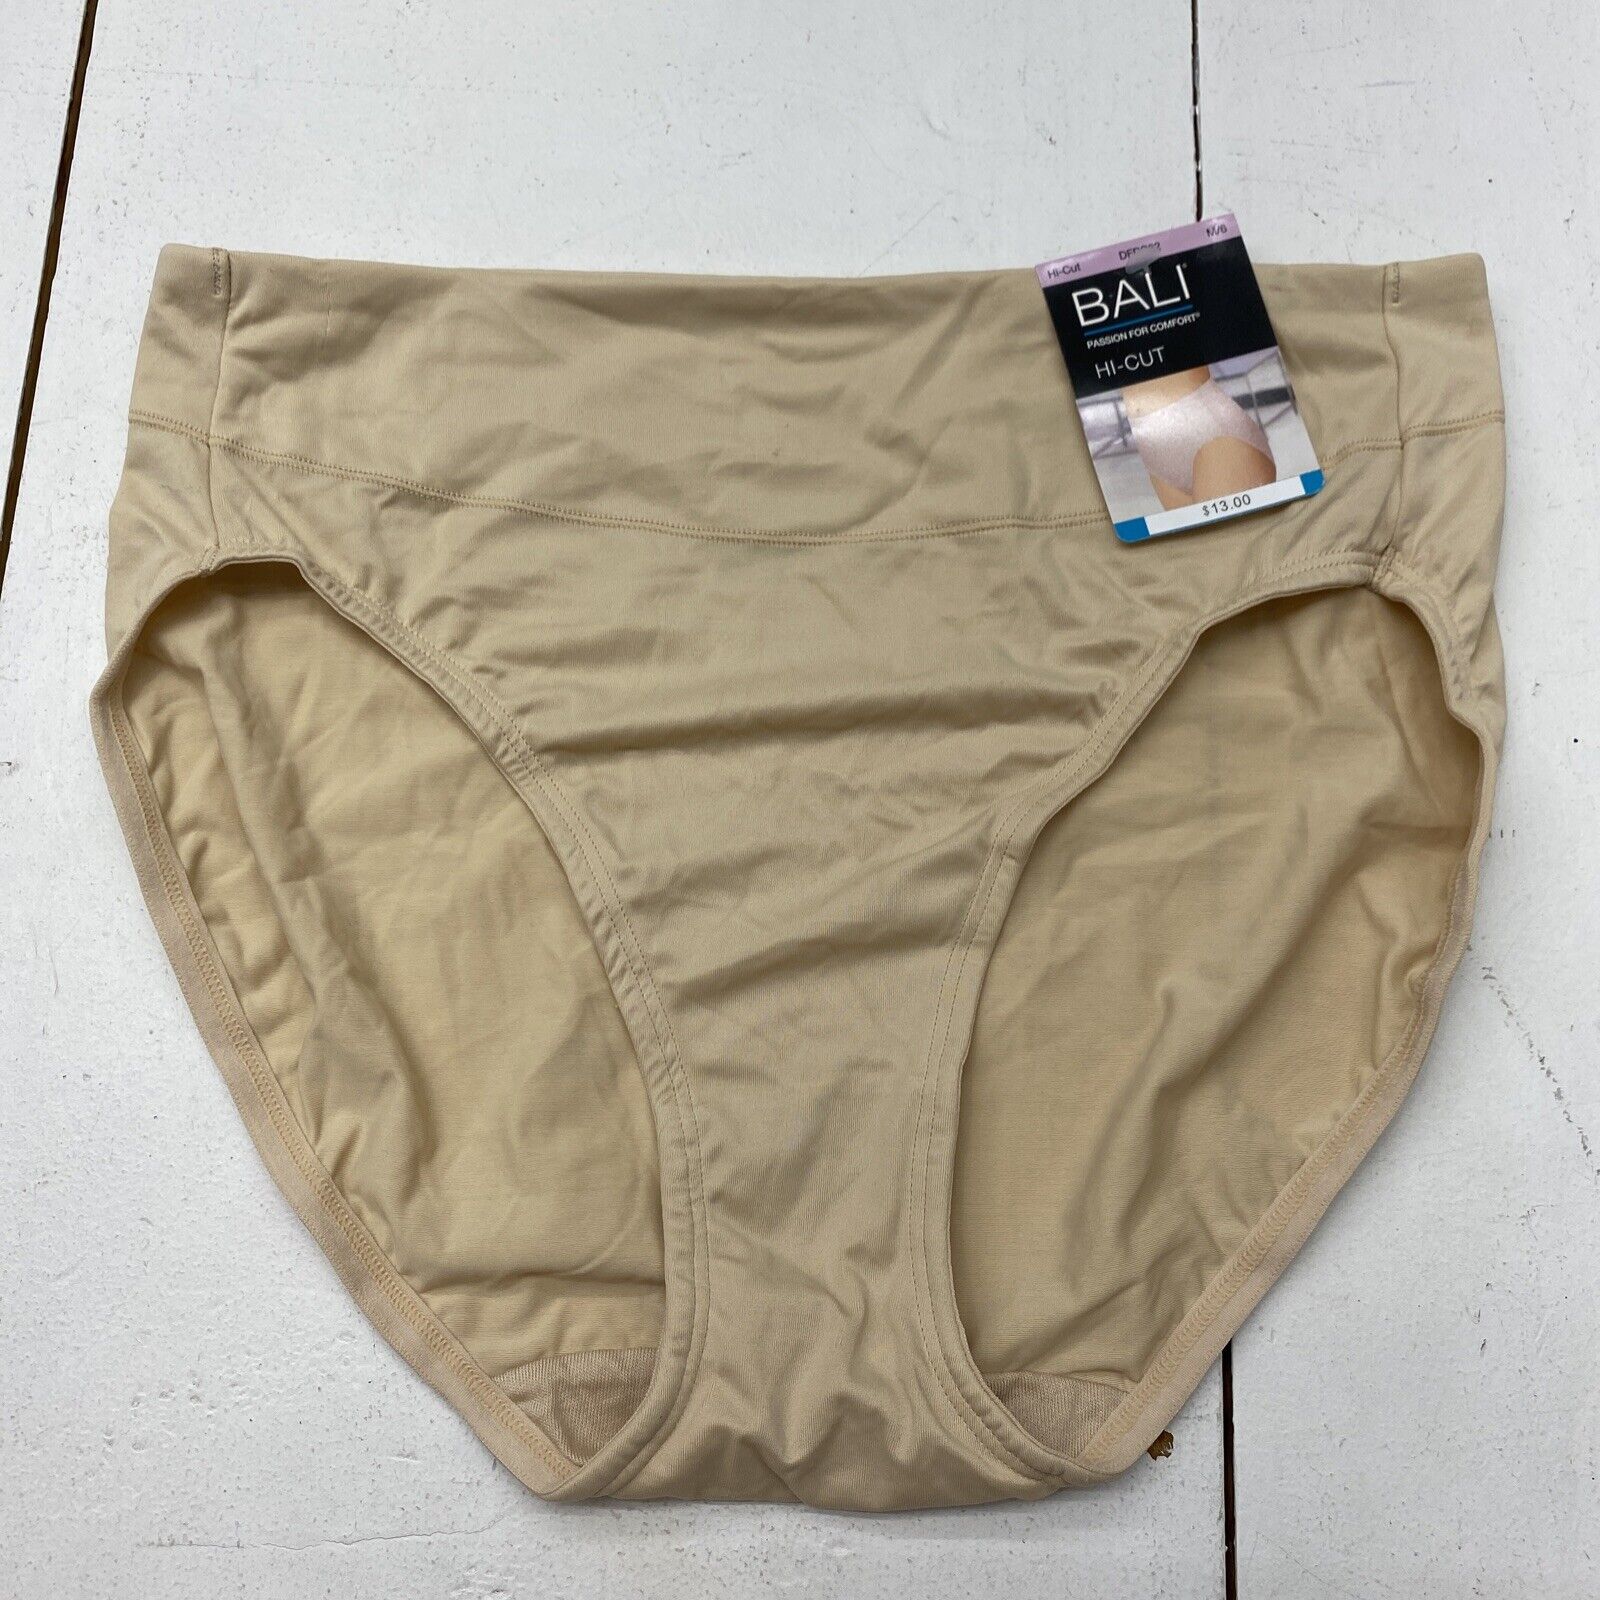 Shop Bali Panties and Bali Underwear